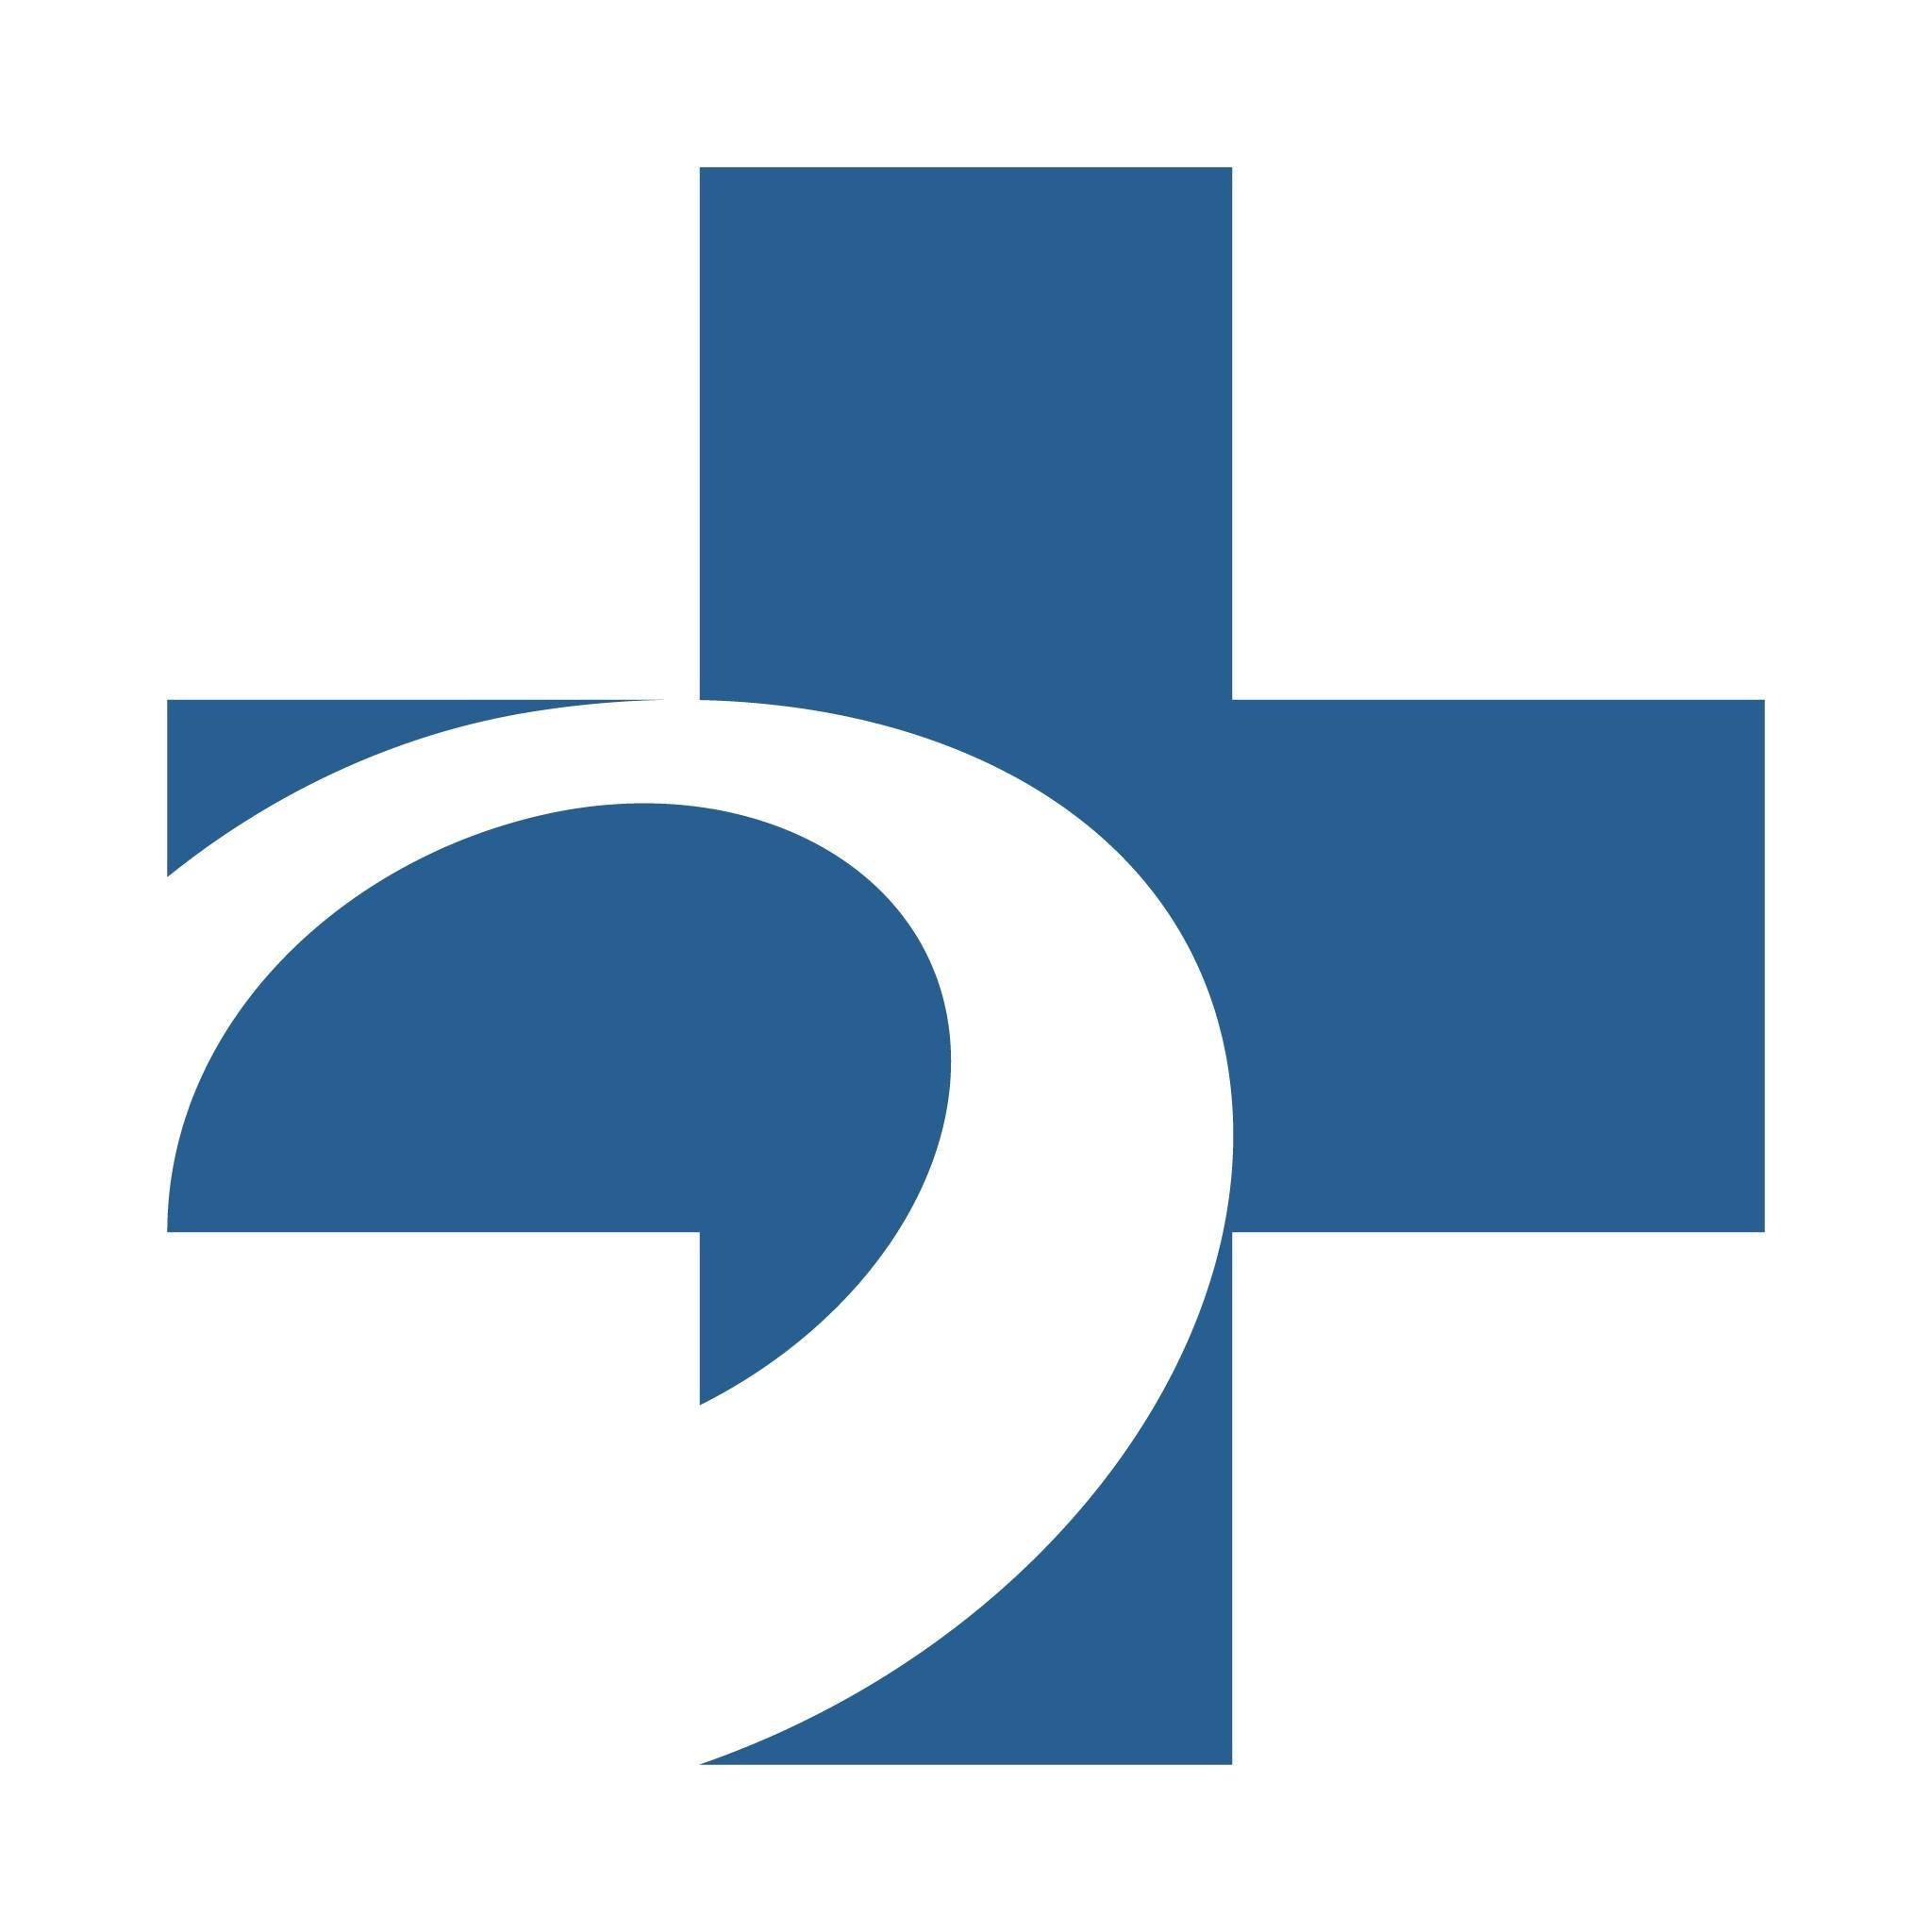 The Ottawa Hospital logo